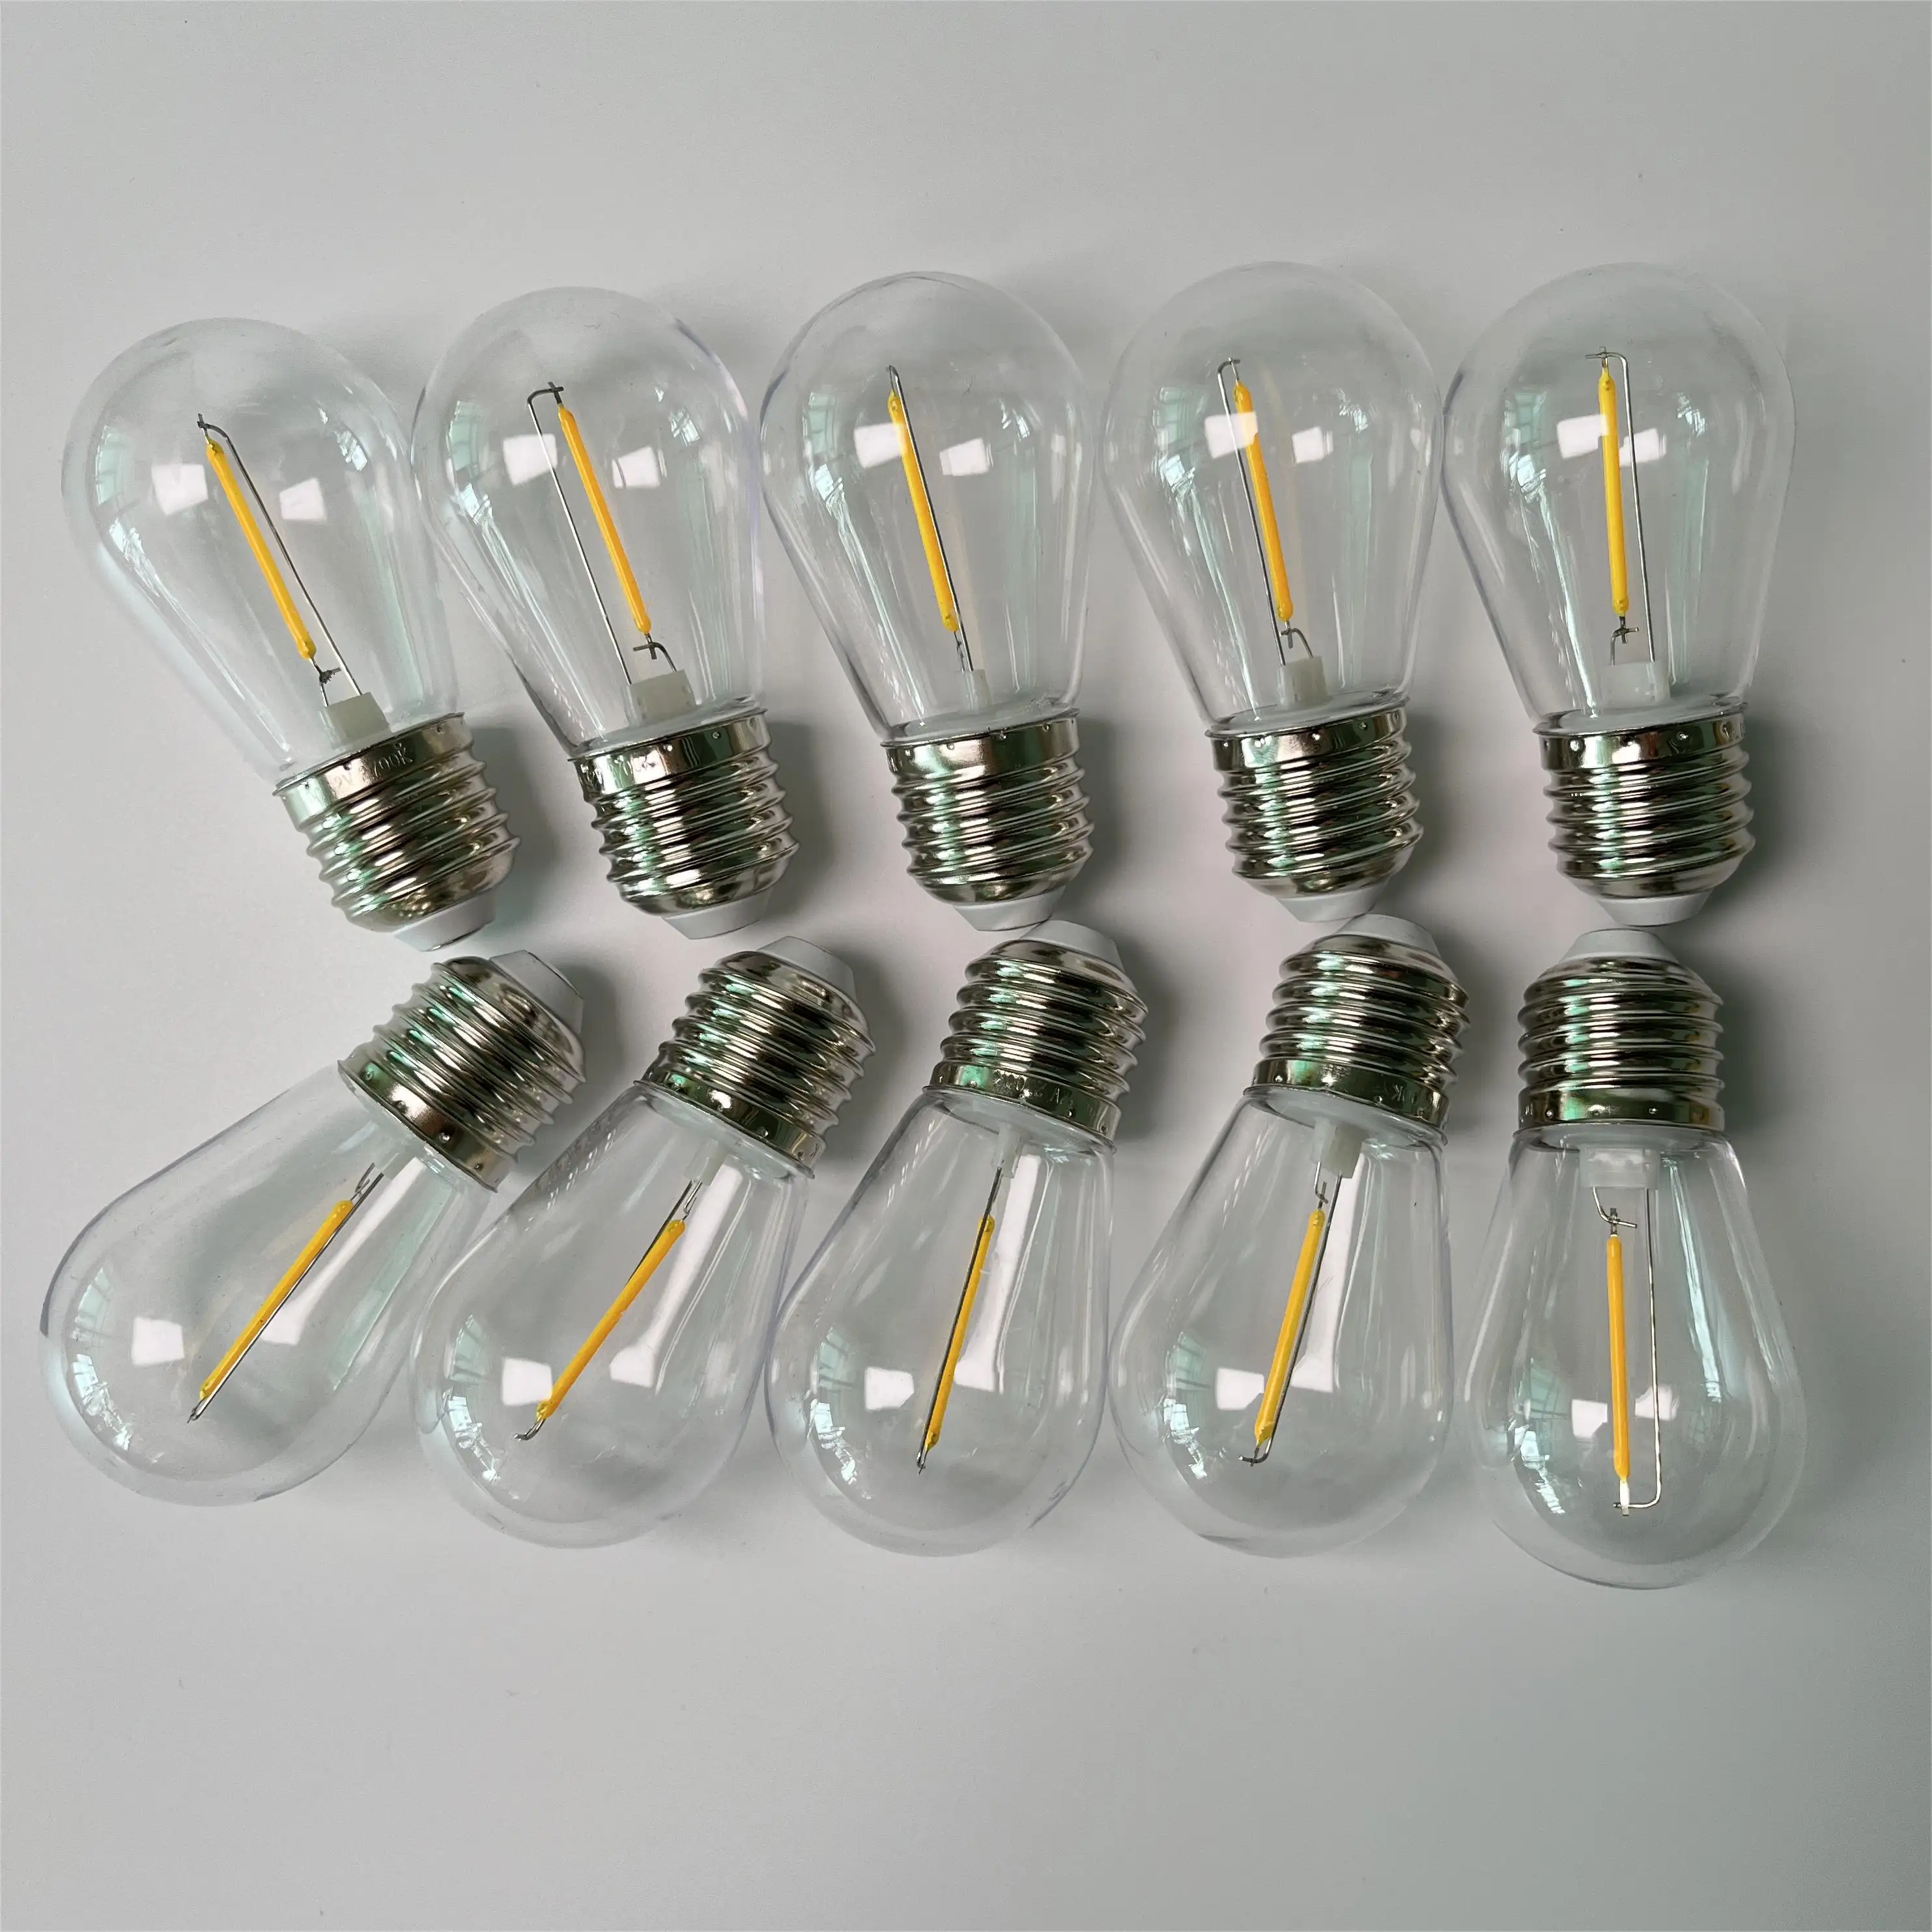 Bombillas de filamento LED S14, bombillas adicionales, bombillas reemplazables para luces de cadena LED para exteriores, luces de festón